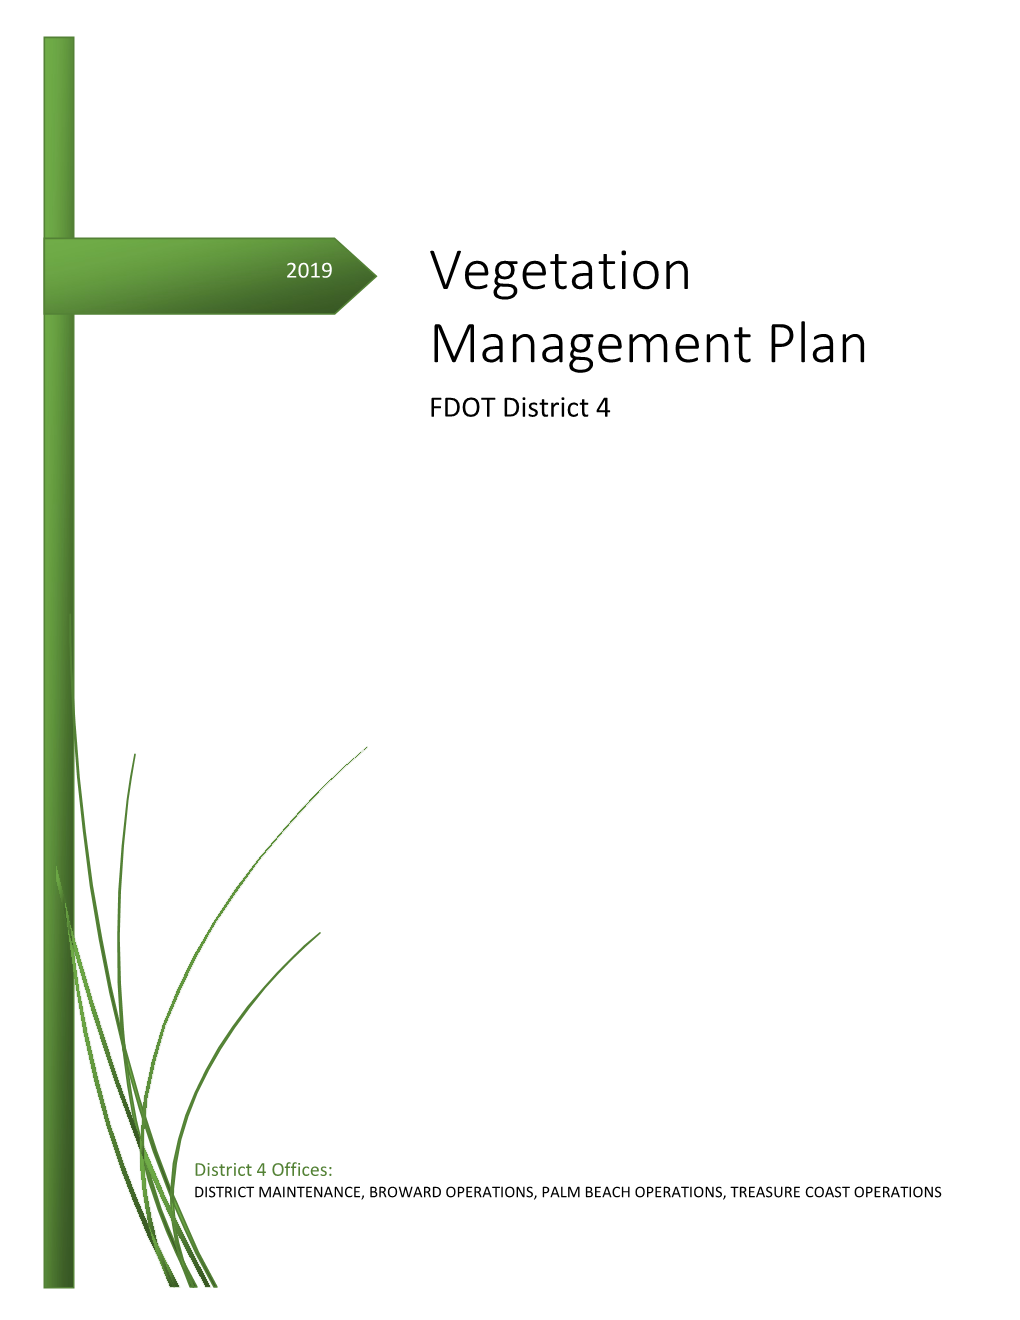 Vegetation Management Plan FDOT District 4